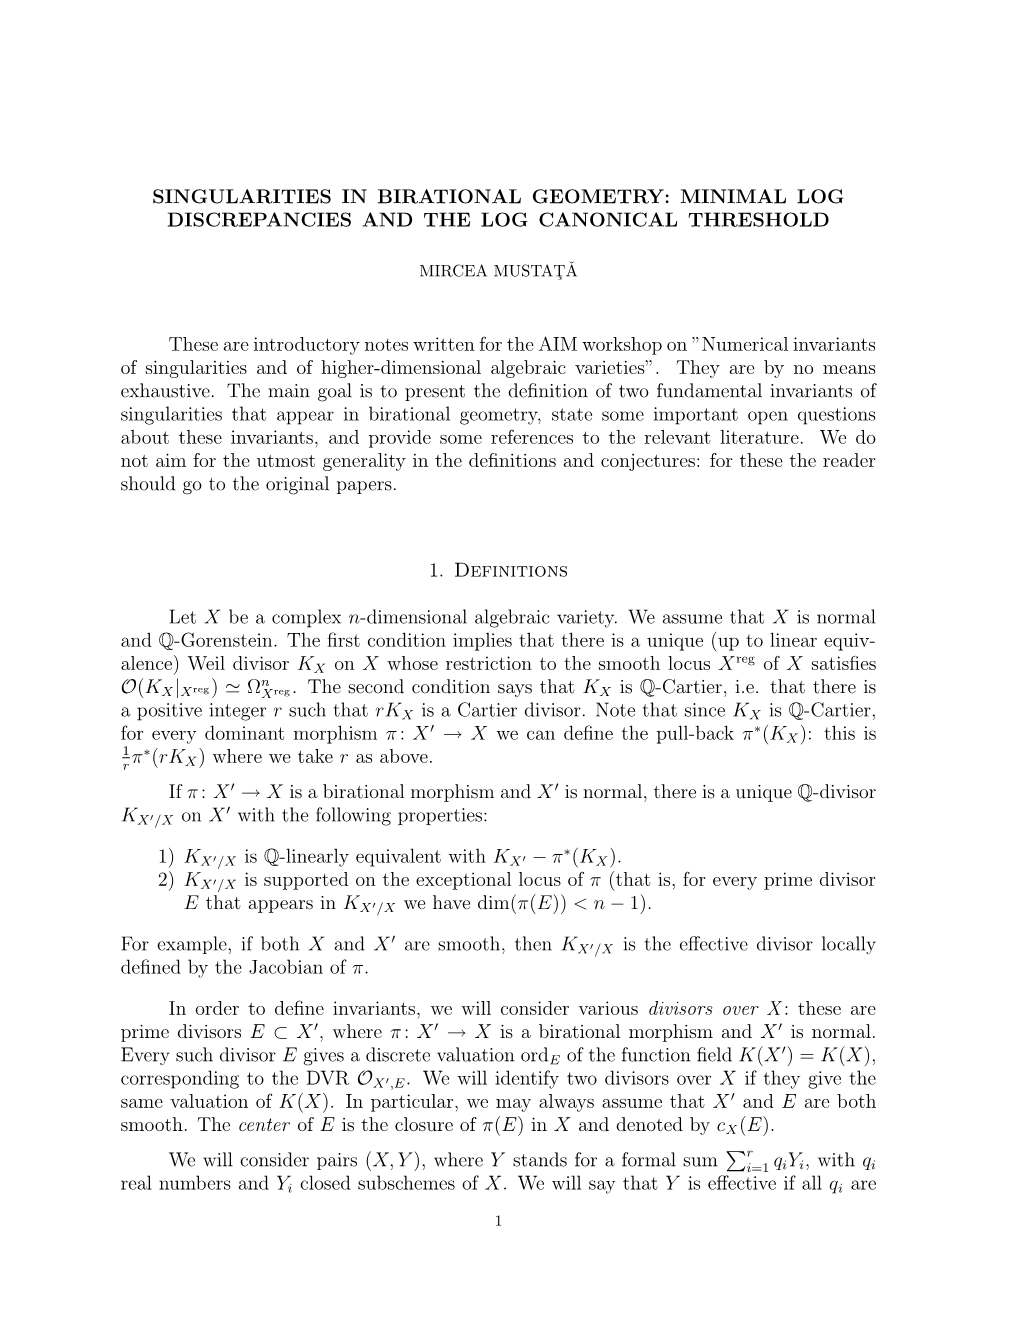 Singularities in Birational Geometry: Minimal Log Discrepancies and the Log Canonical Threshold